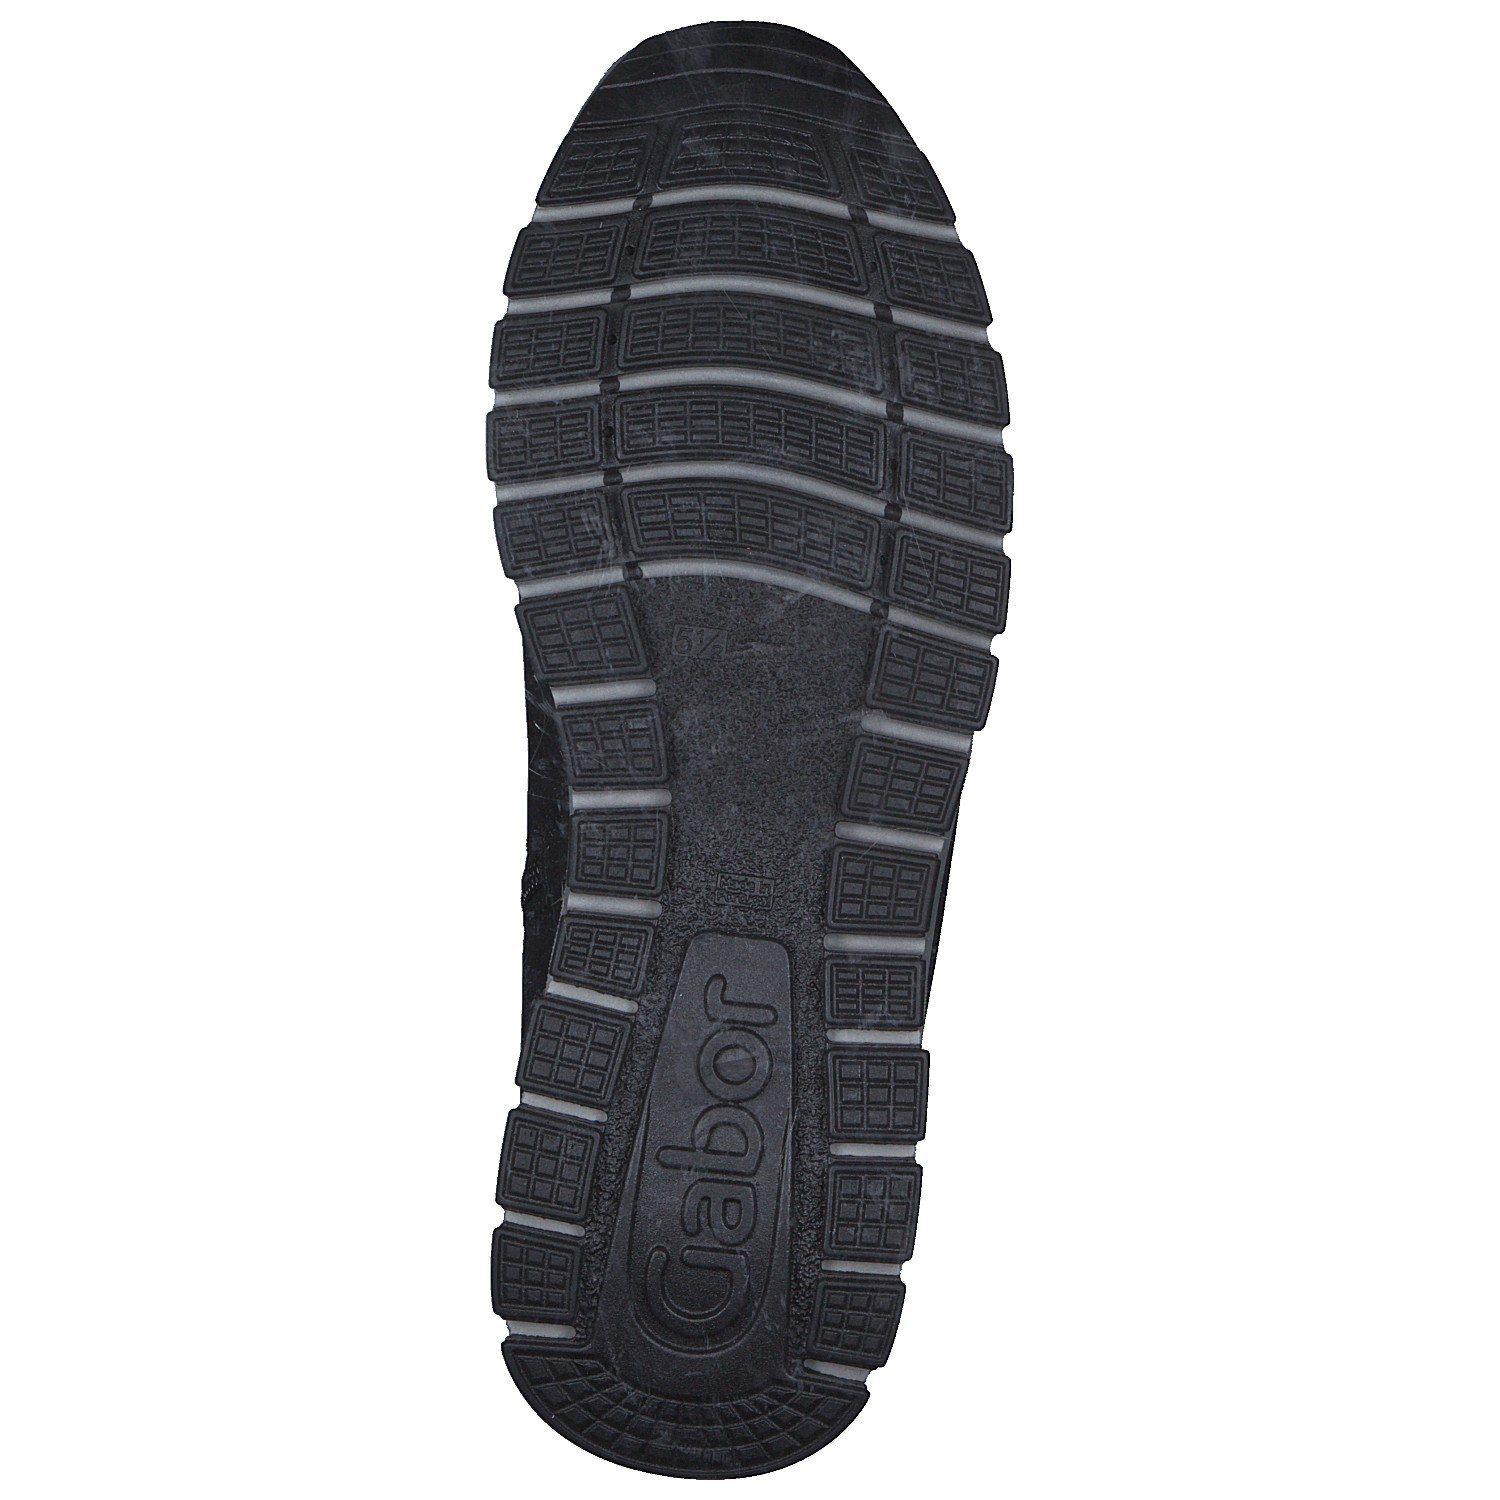 Gabor (grey) Gabor Ankleboots (07301897) schwarz 93.550